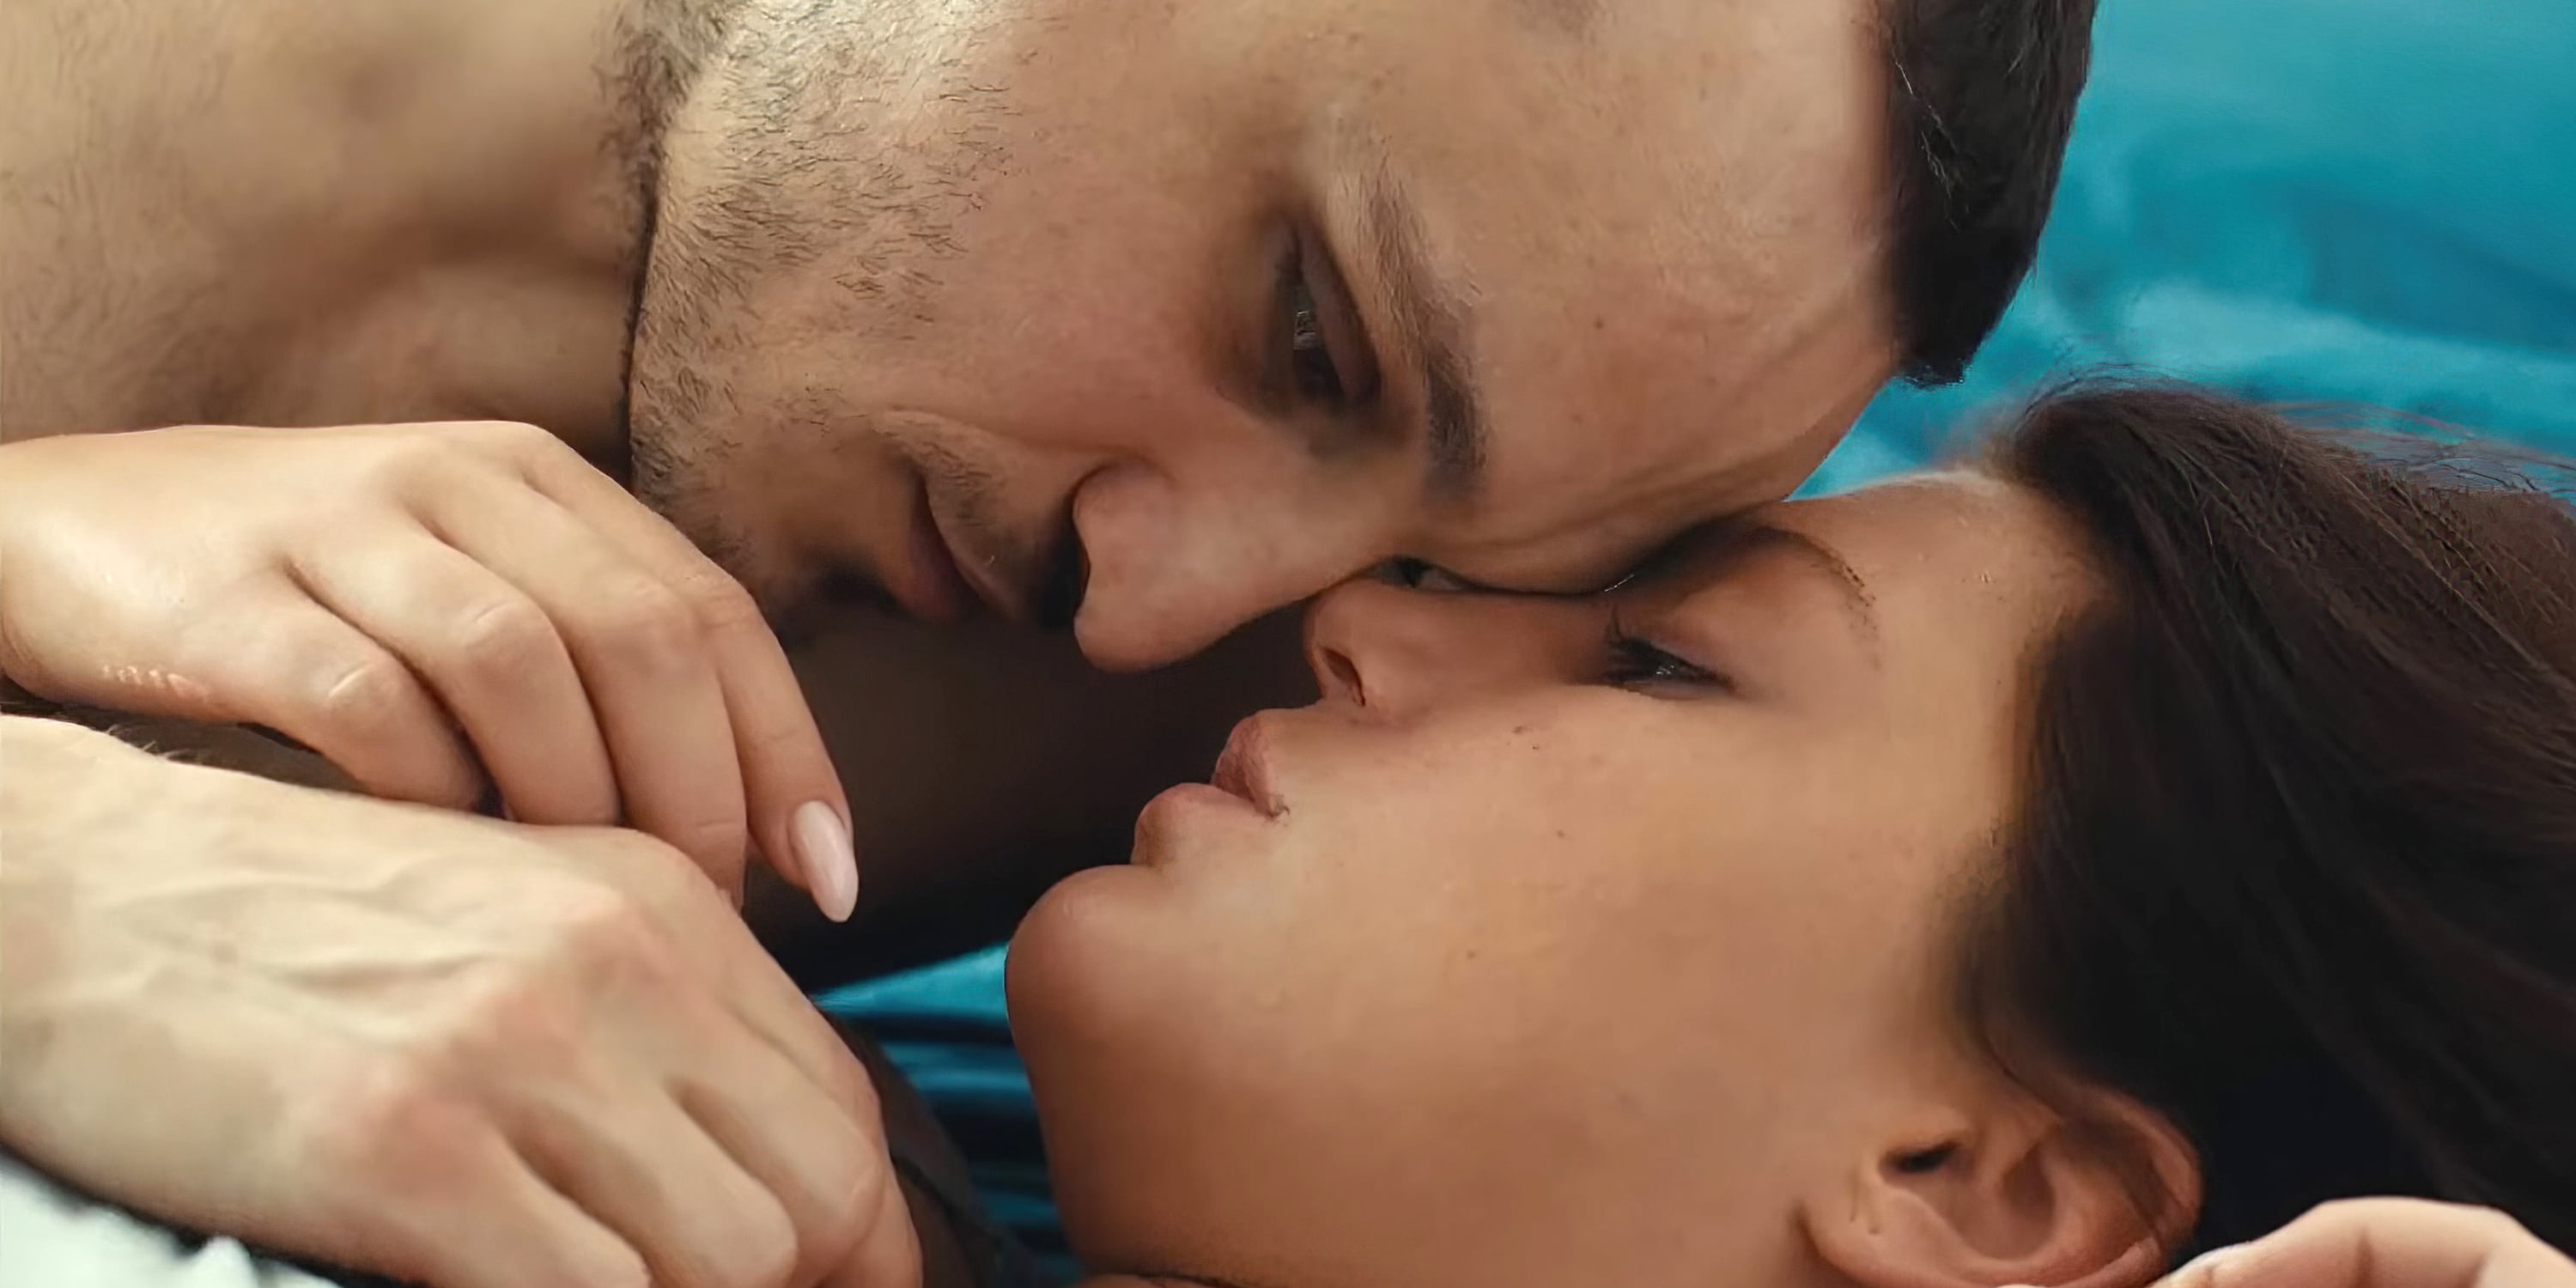 Navy Blue Film Full Sexy Video - Best NC-17 Movies to Watch | POPSUGAR Love & Sex